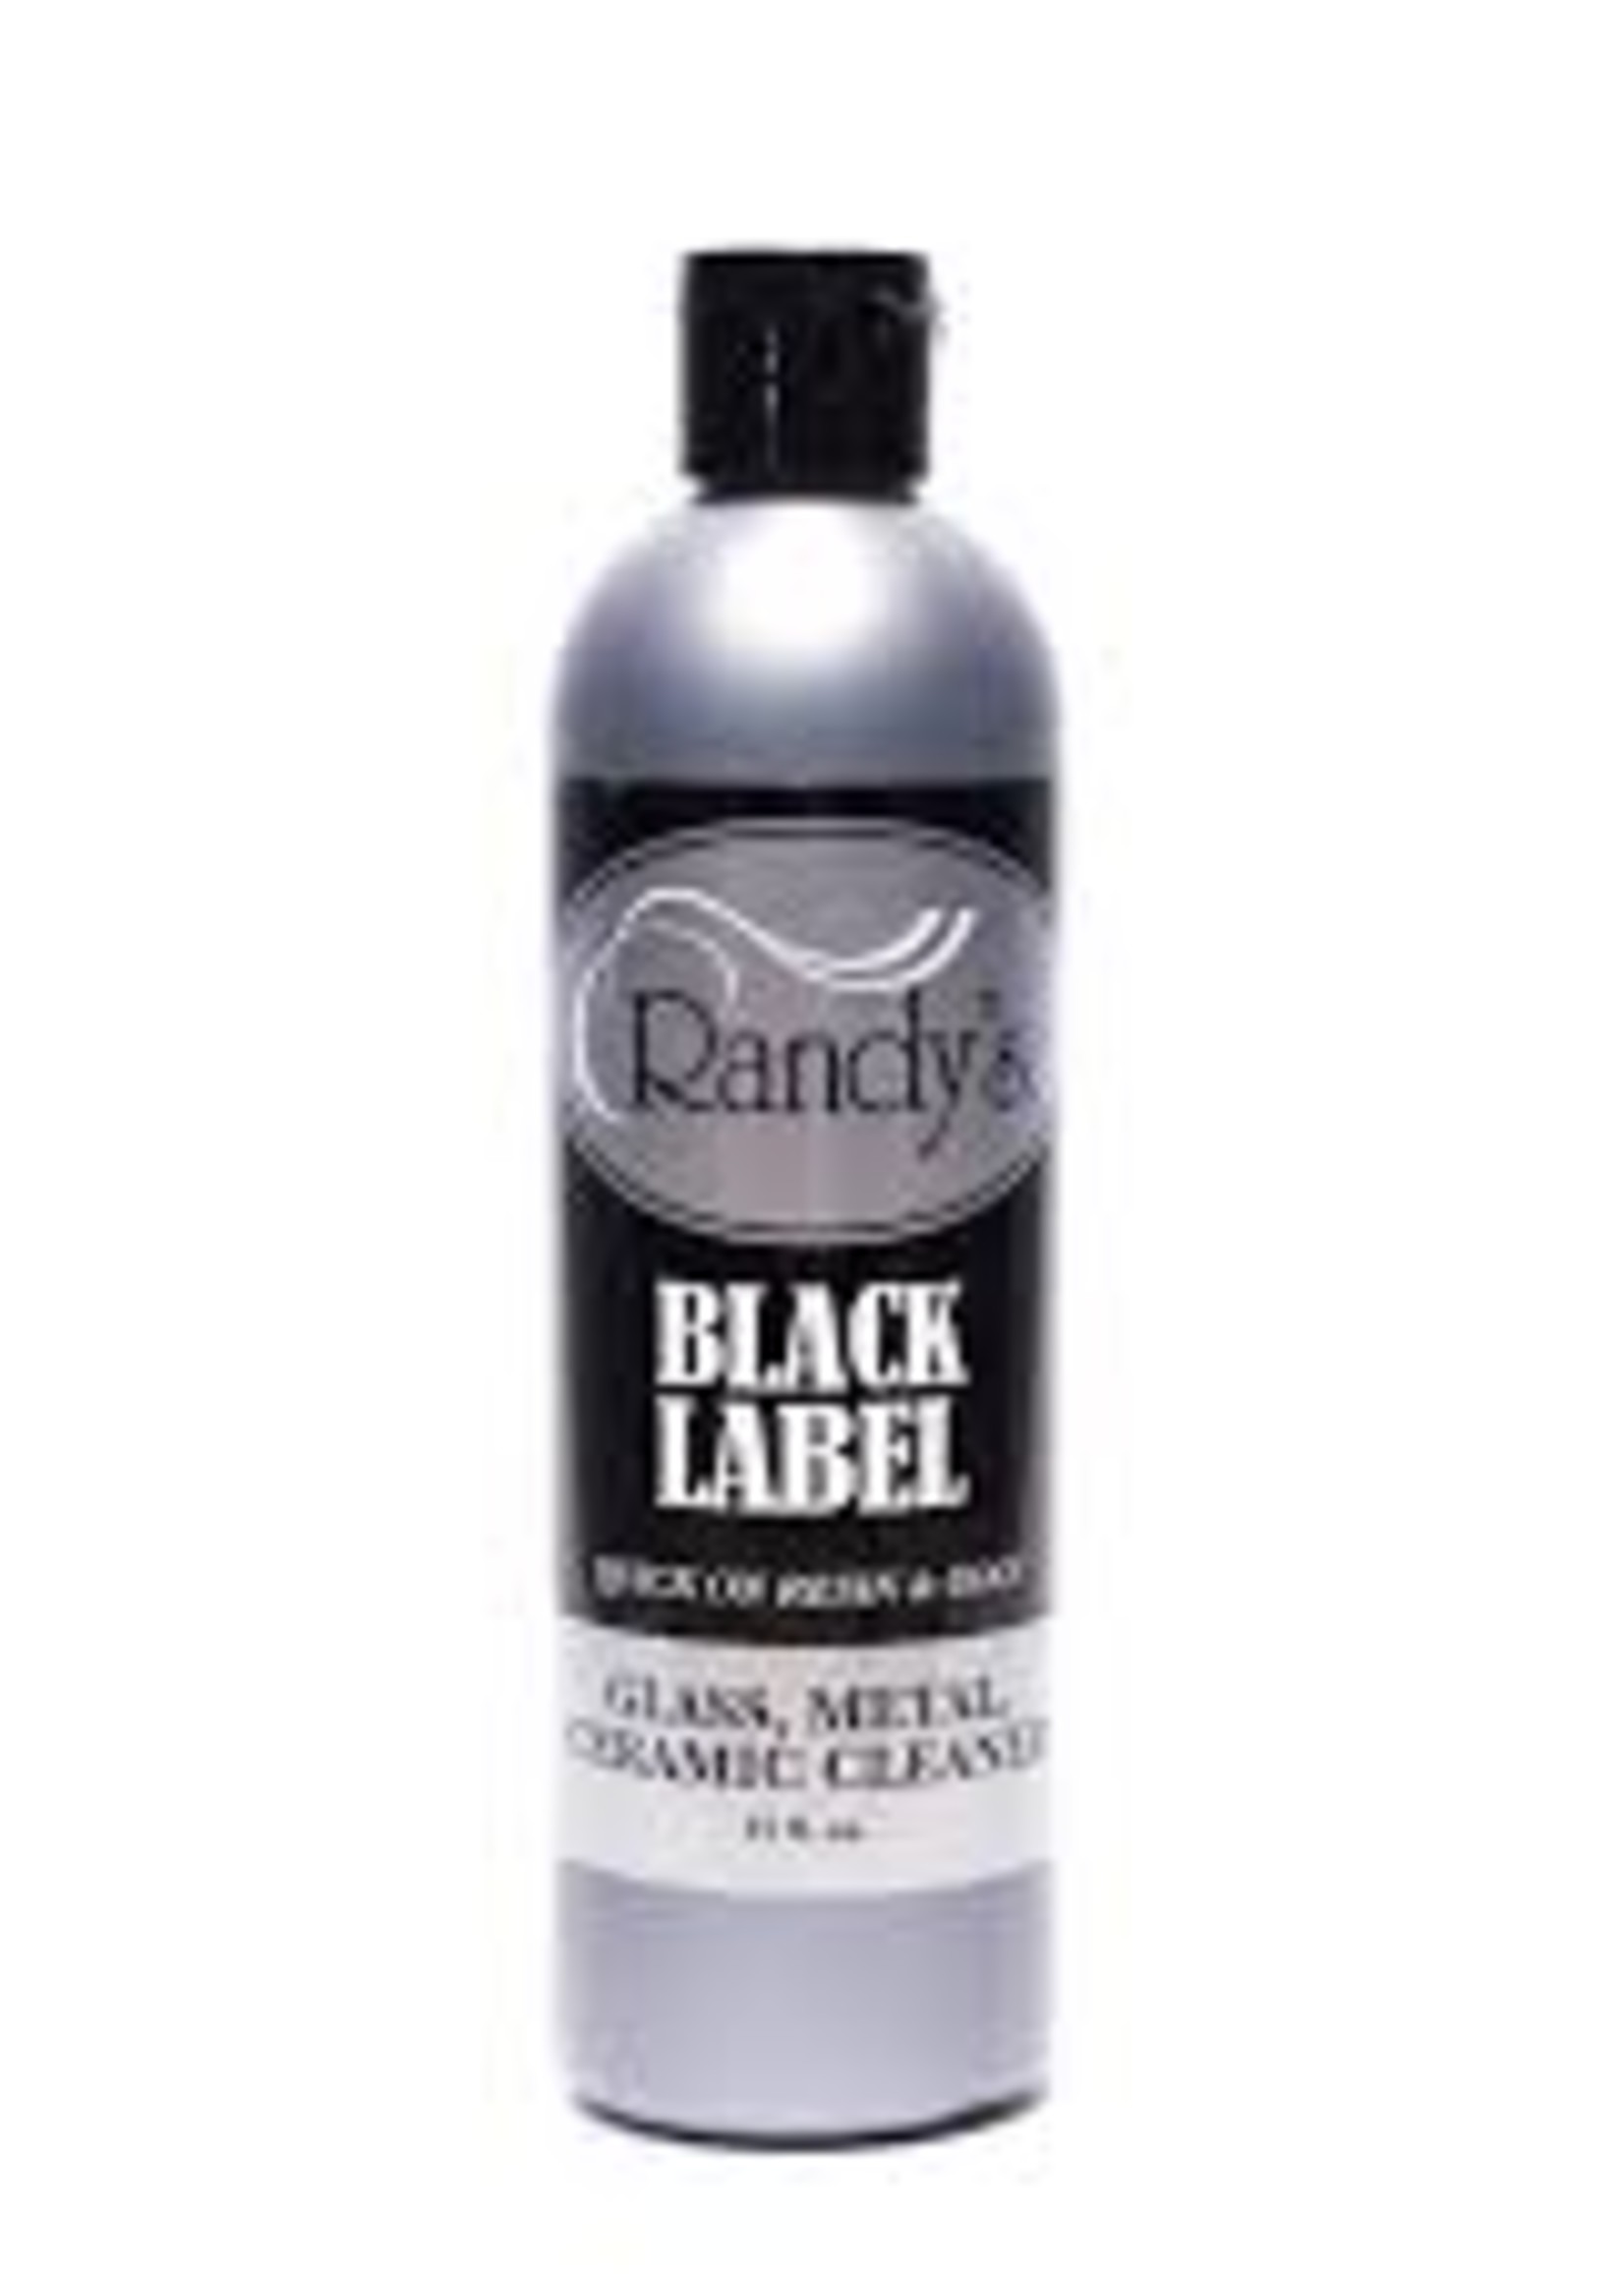 Randy's Randy's Black Label 12 oz Cleaner